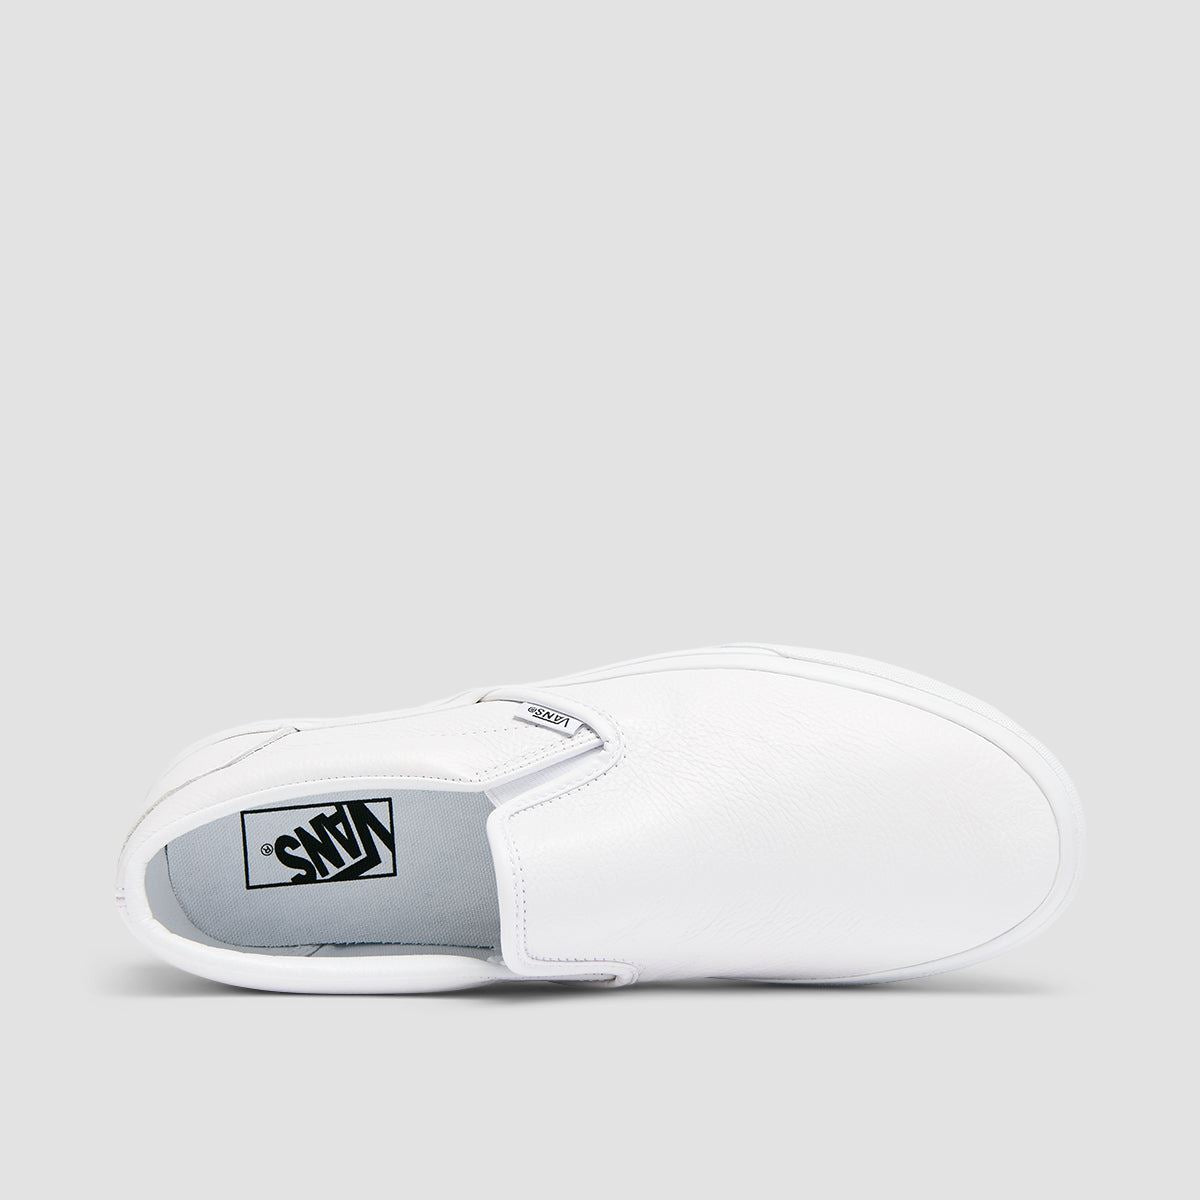 Vans Classic Slip-On Shoes - Leather True White/True White